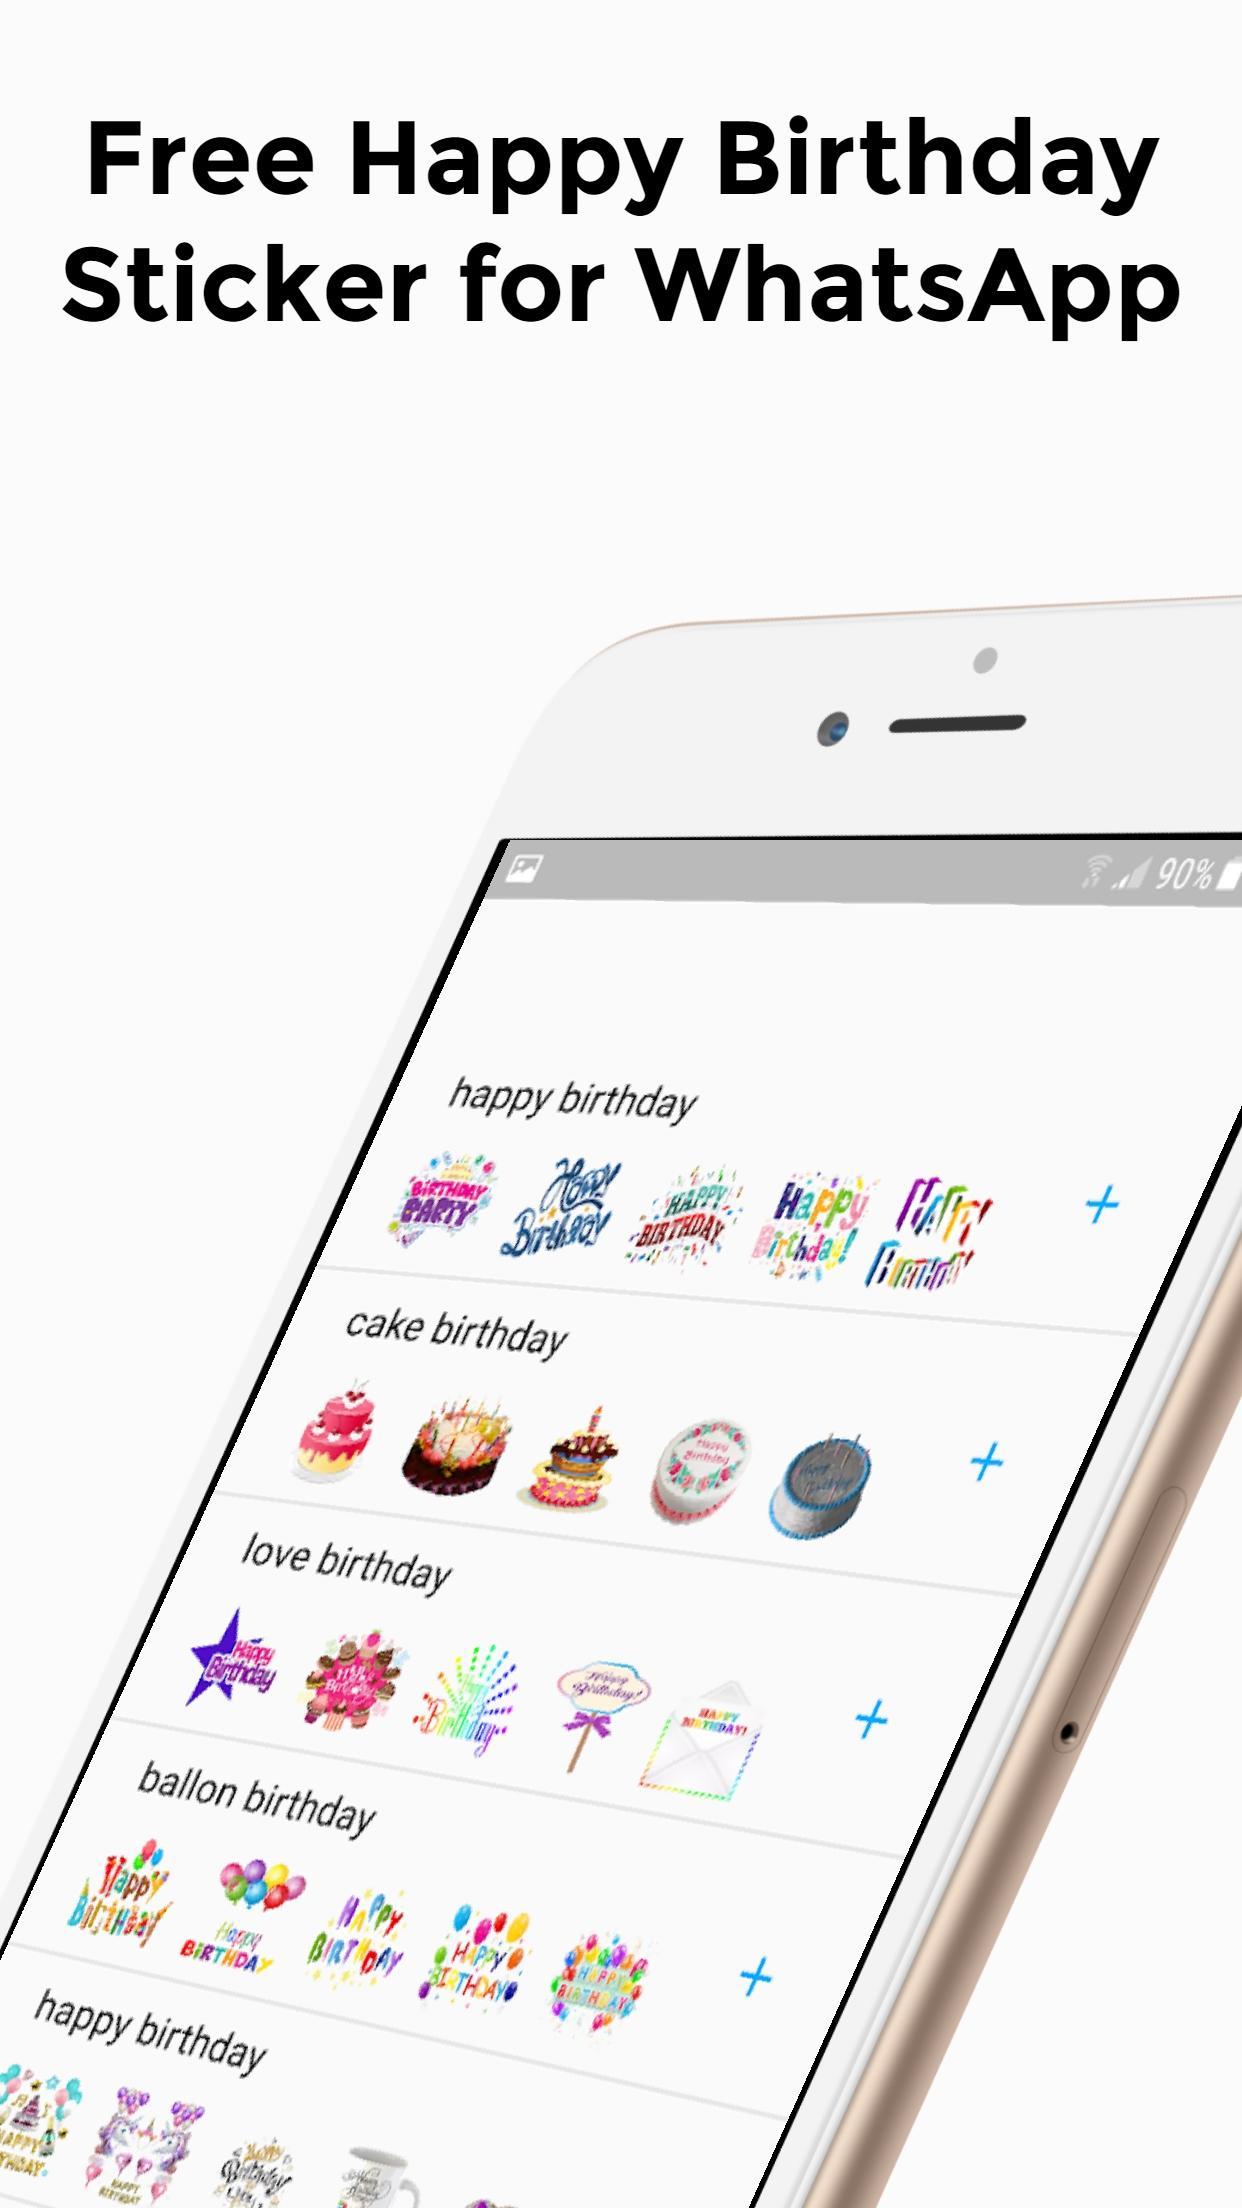 Stiker Wa Selamat Ulang Tahun For Android Apk Download